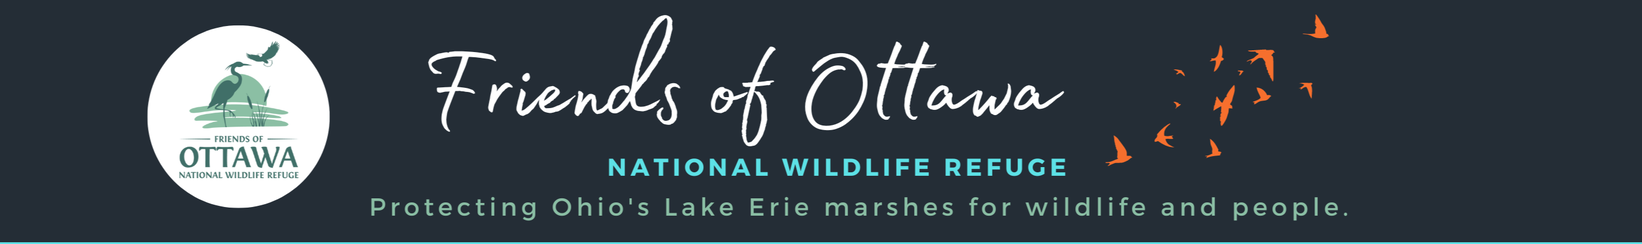 Friends of Ottawa National Wildlife Refuge